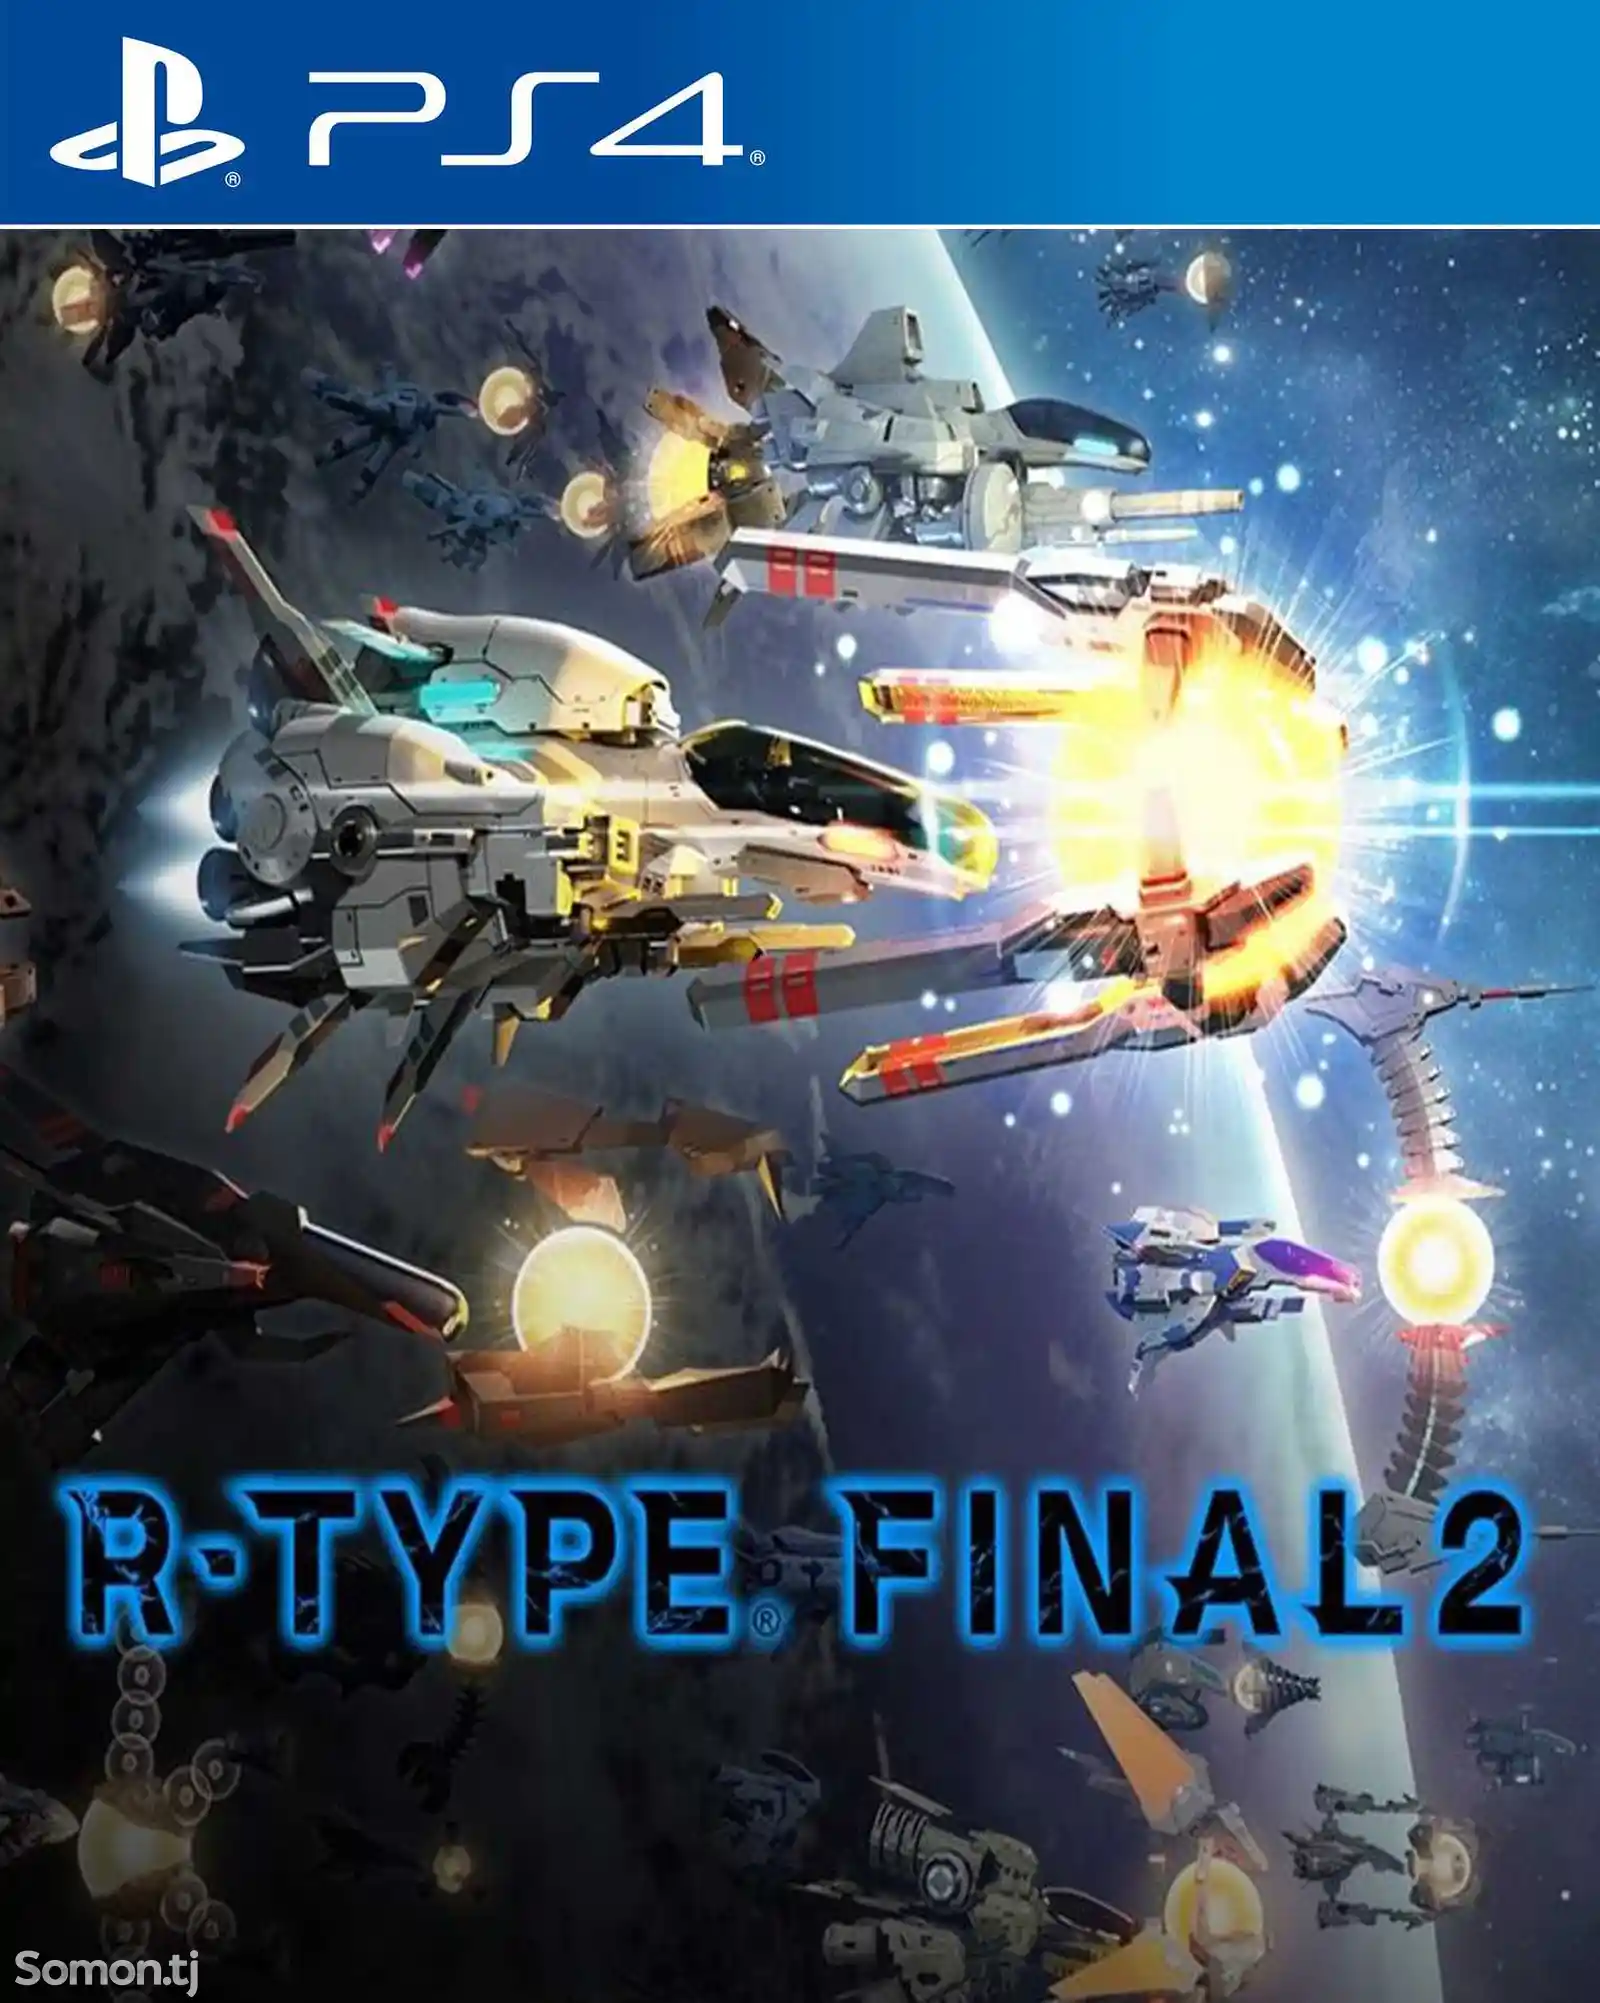 Игра R type final 2 для PS-4 / 5.05 / 6.72 / 7.02 / 7.55 / 9.00 /-1